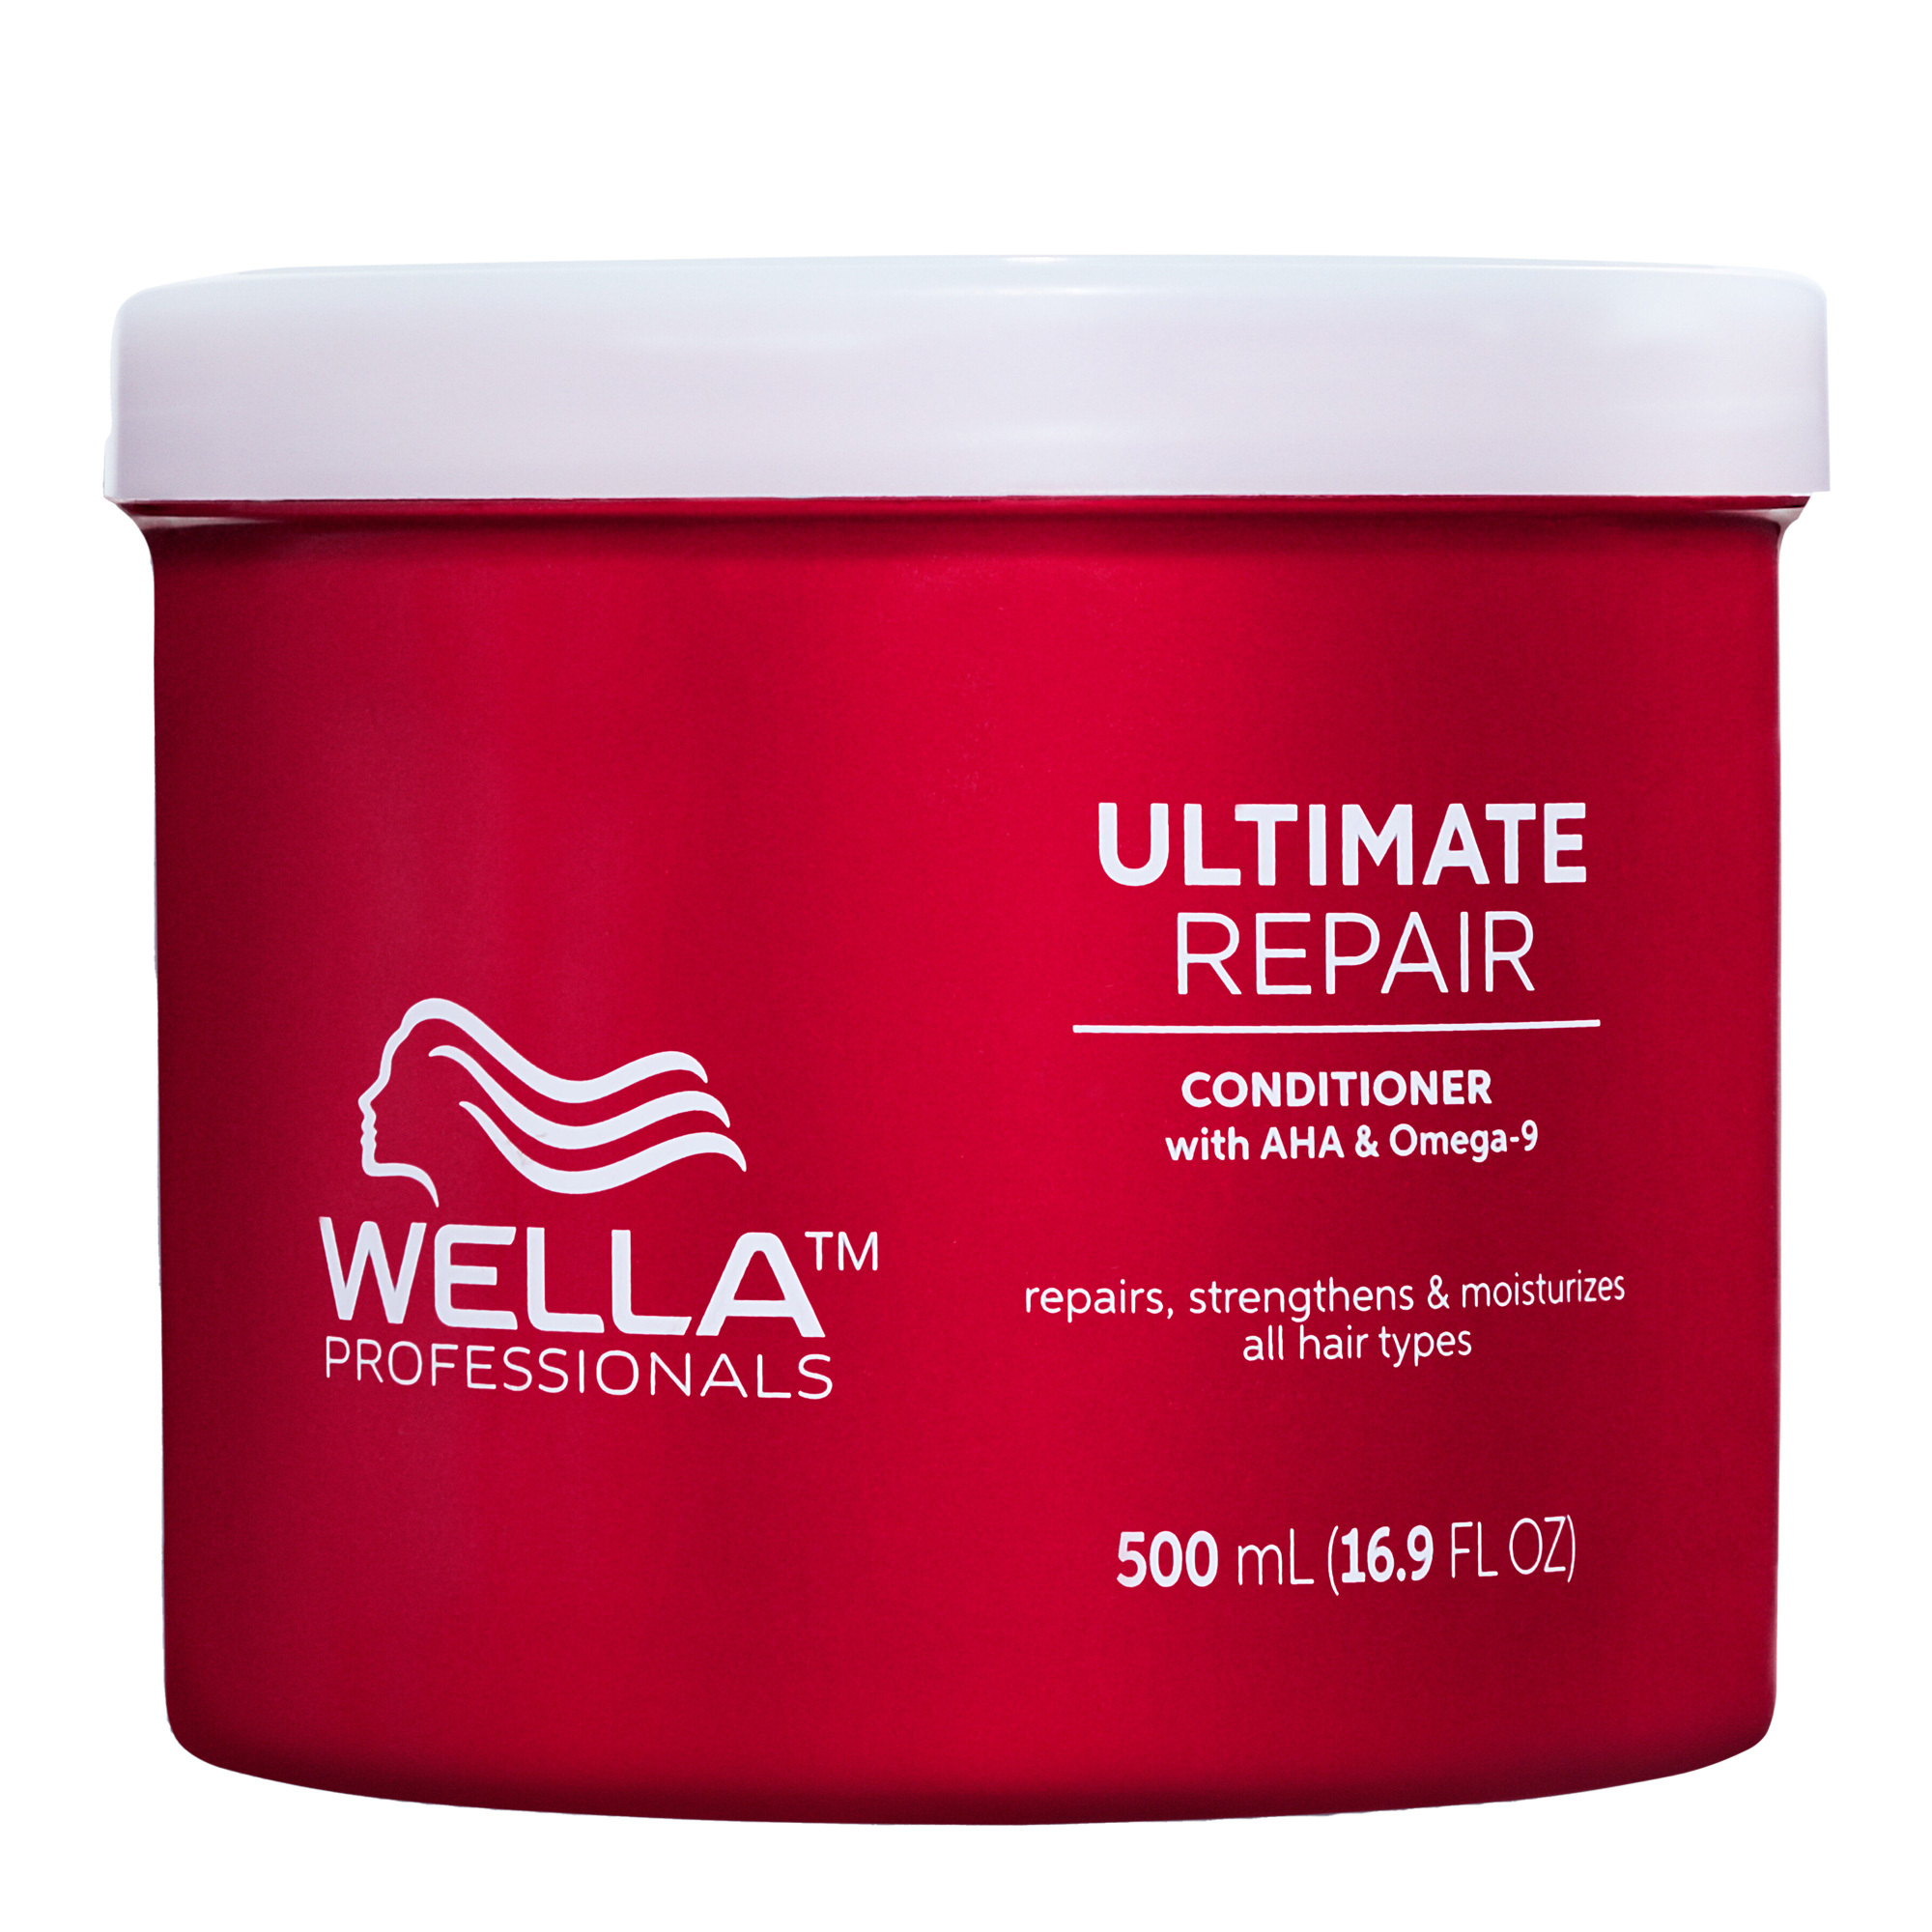 Wella Ultimate Repair Conditioner Jar